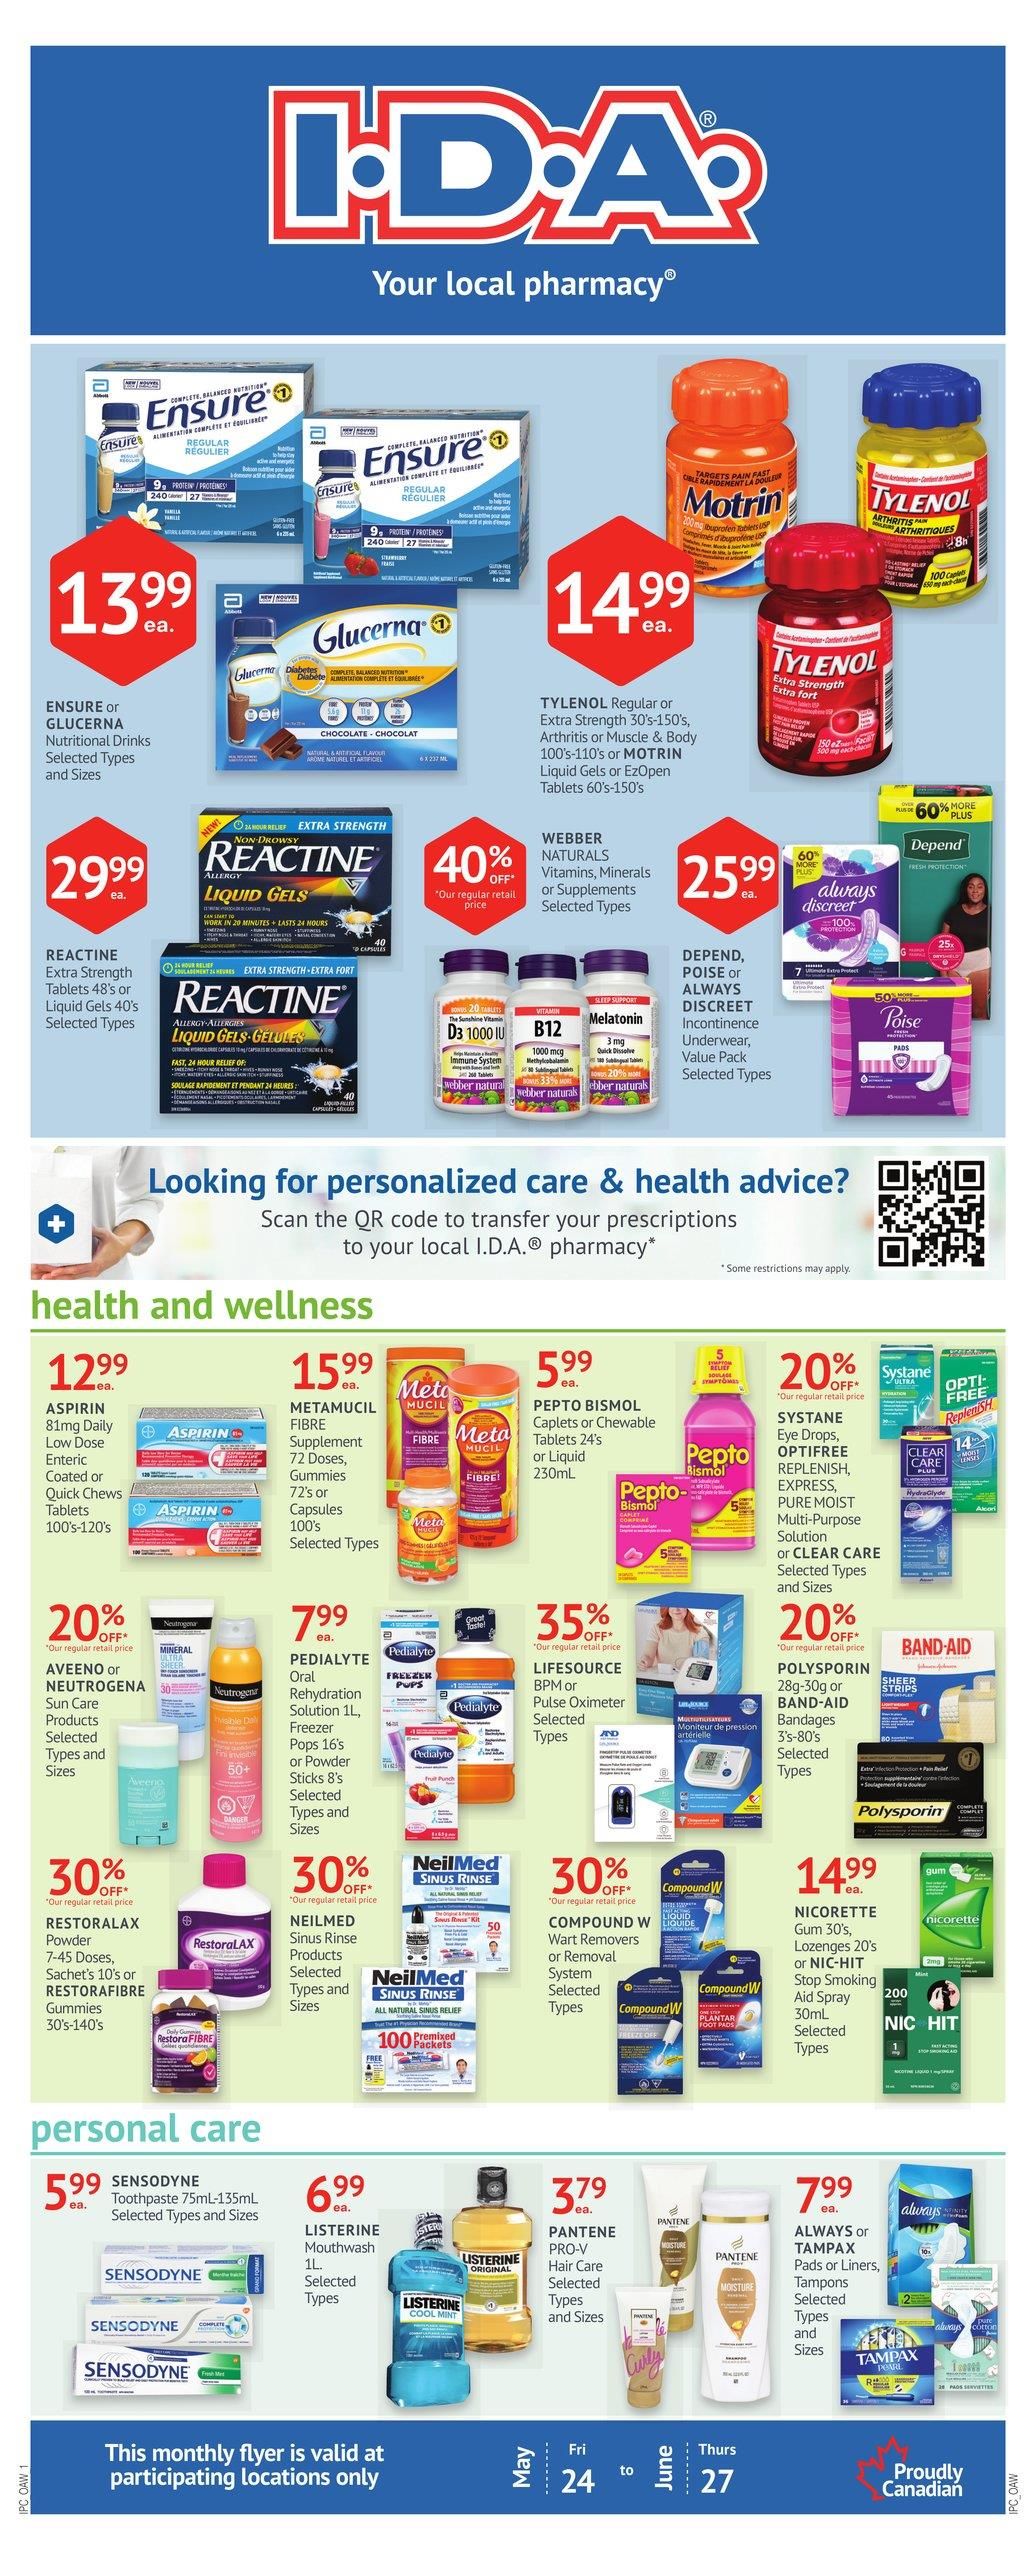 Guardian IDA Pharmacies - Monthly Savings - Page 1